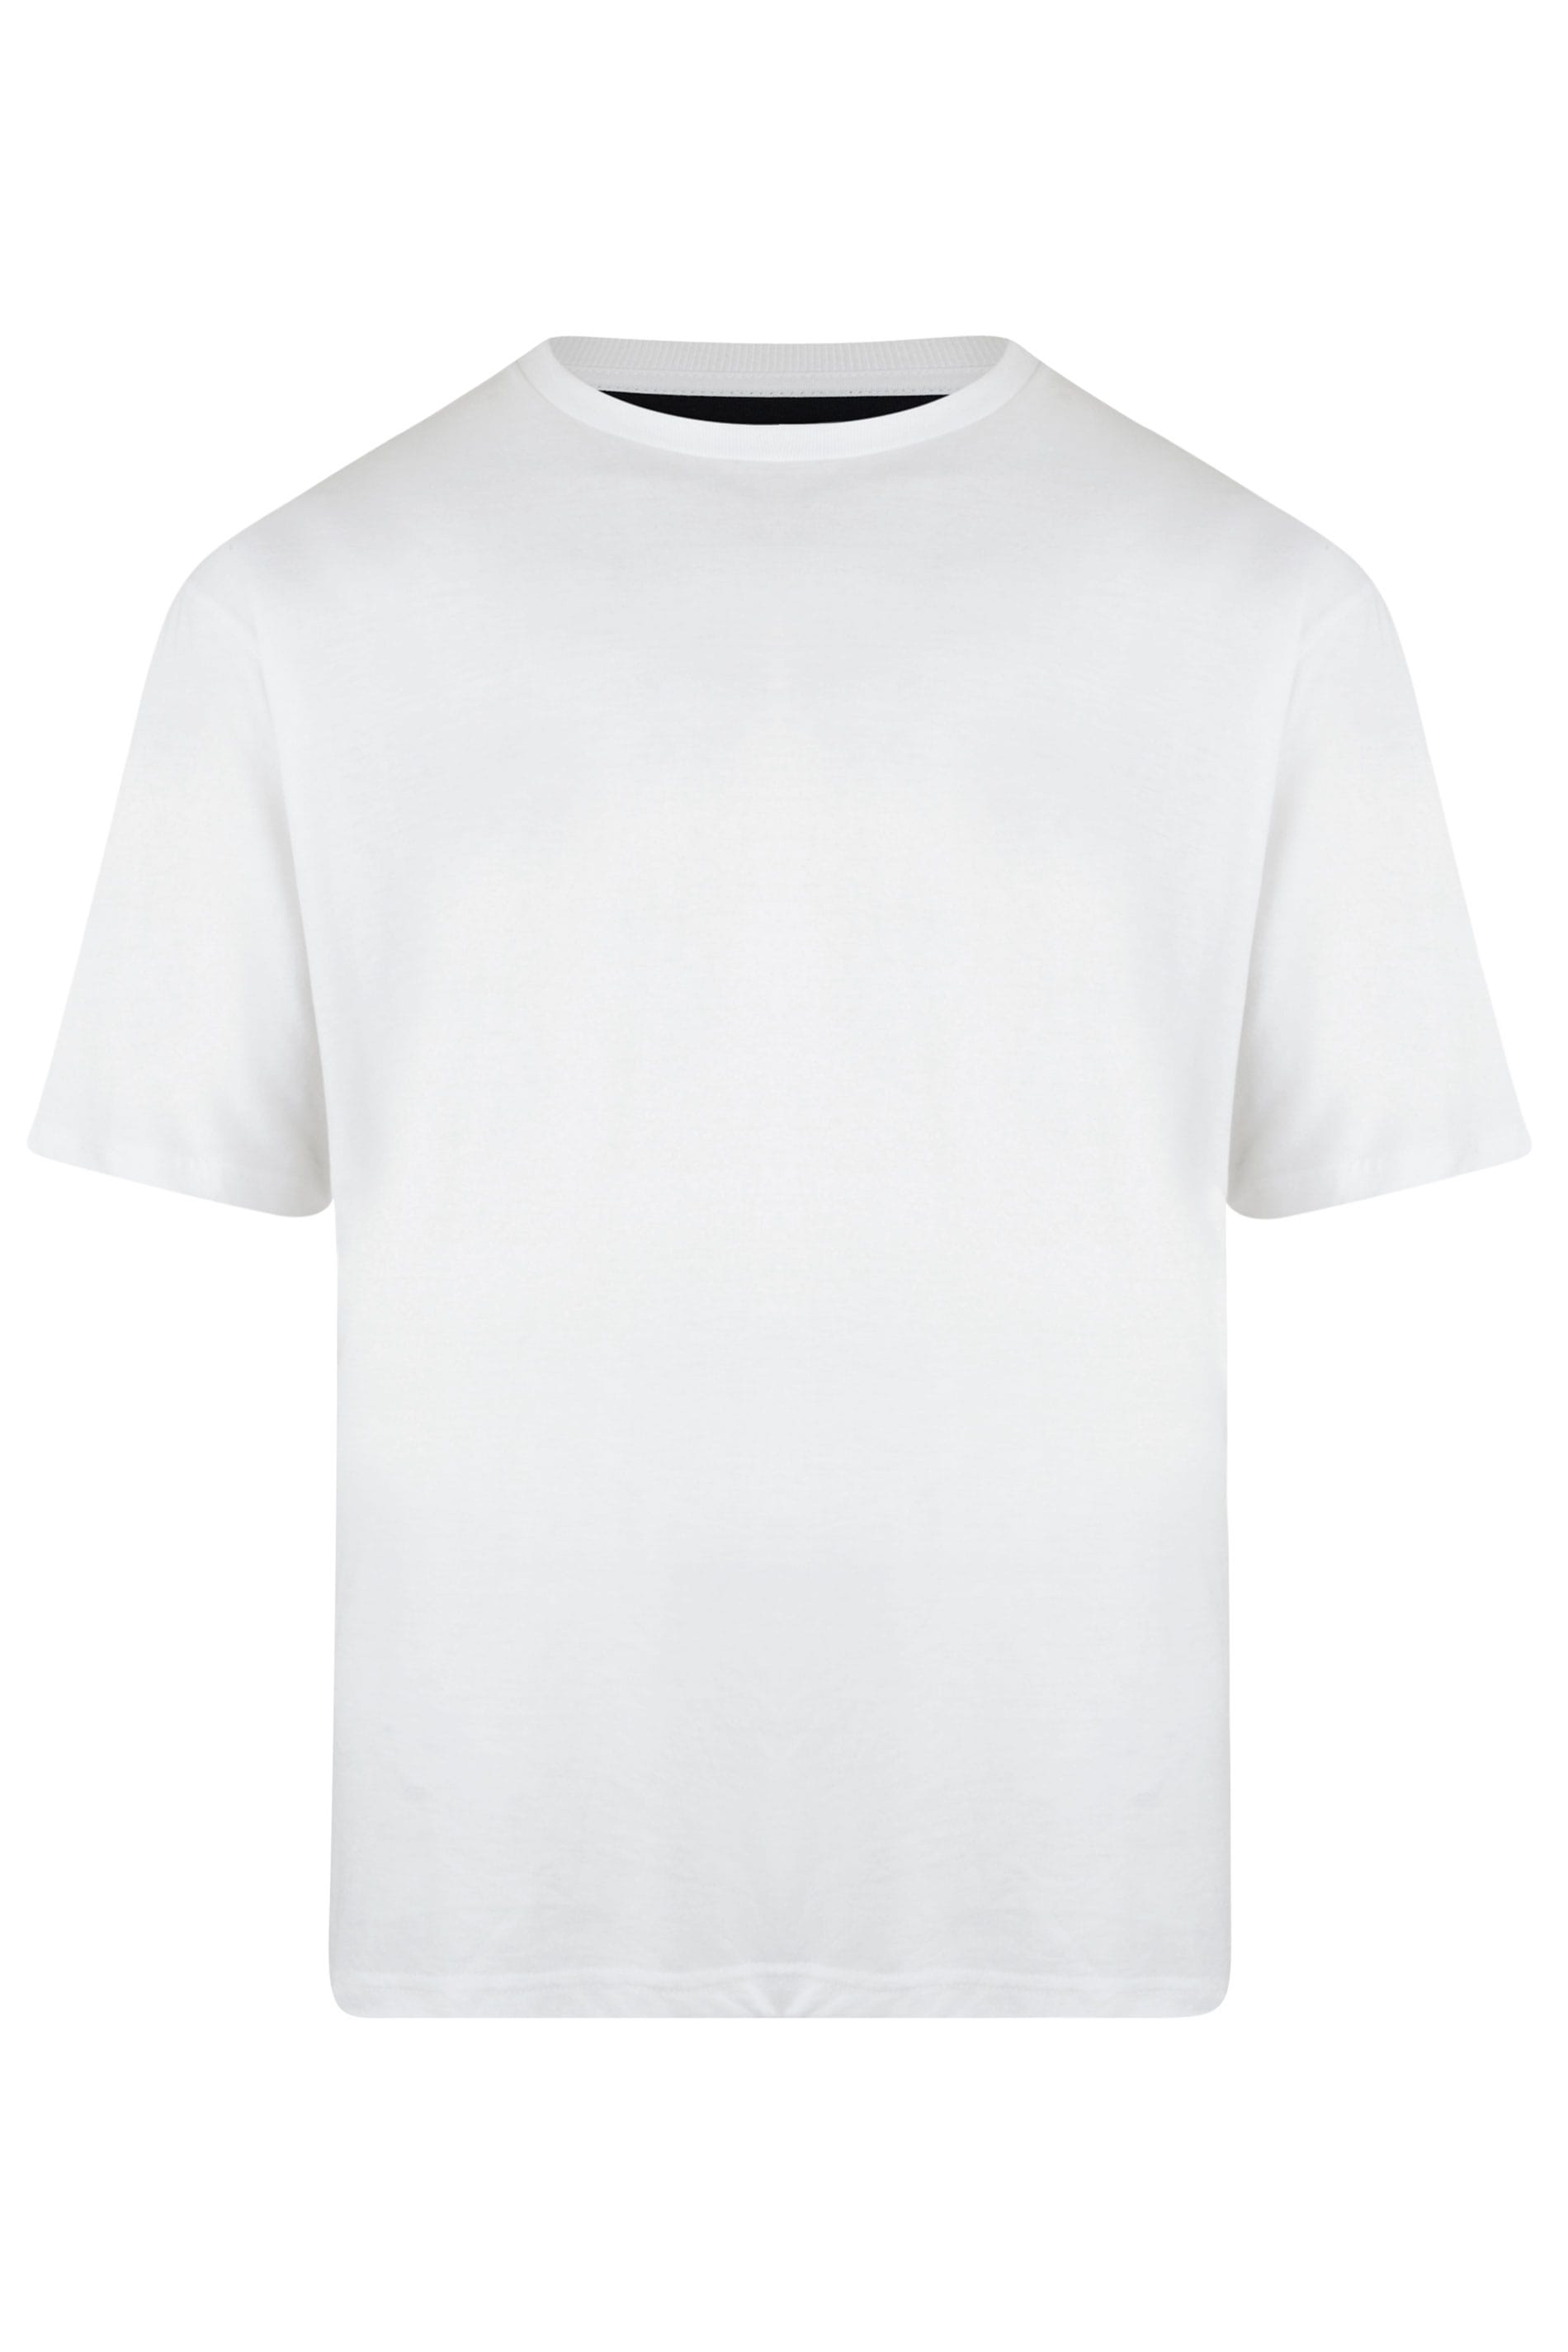 KAM Big & Tall White Plain T-Shirt | BadRhino  2